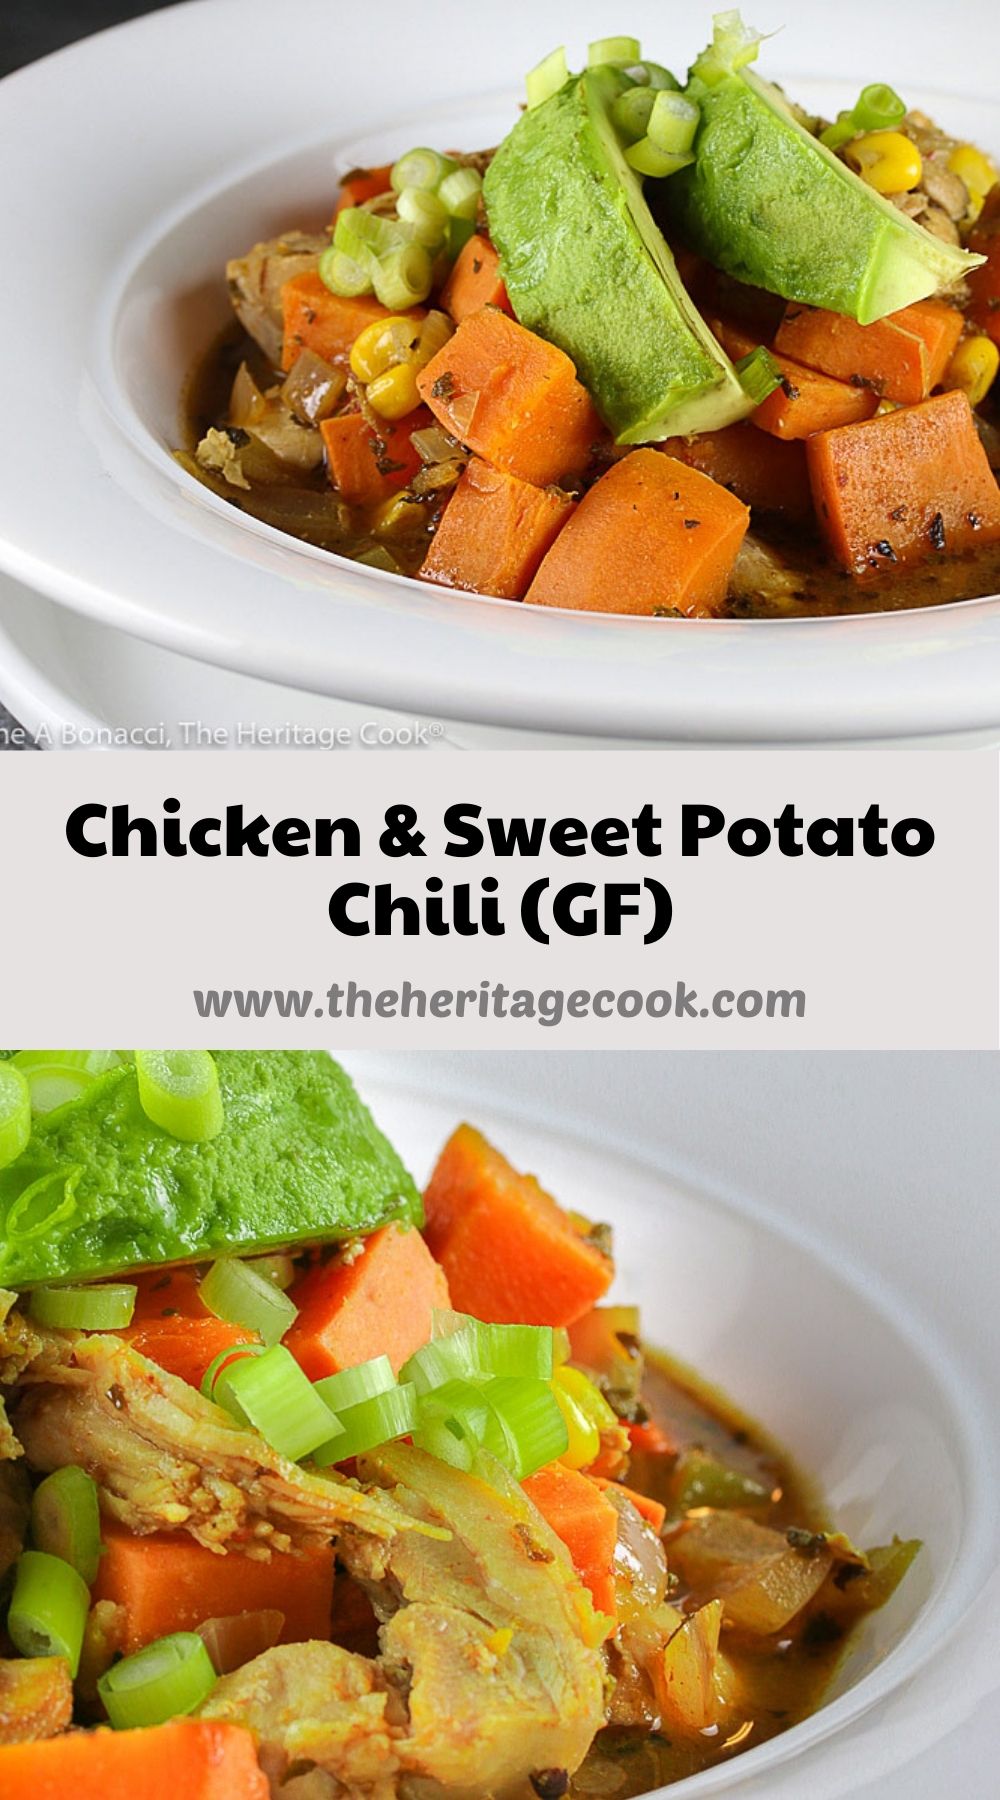 Chicken and Sweet Potato Chili (GF) © 2021 Jane Bonacci, The Heritage Cook